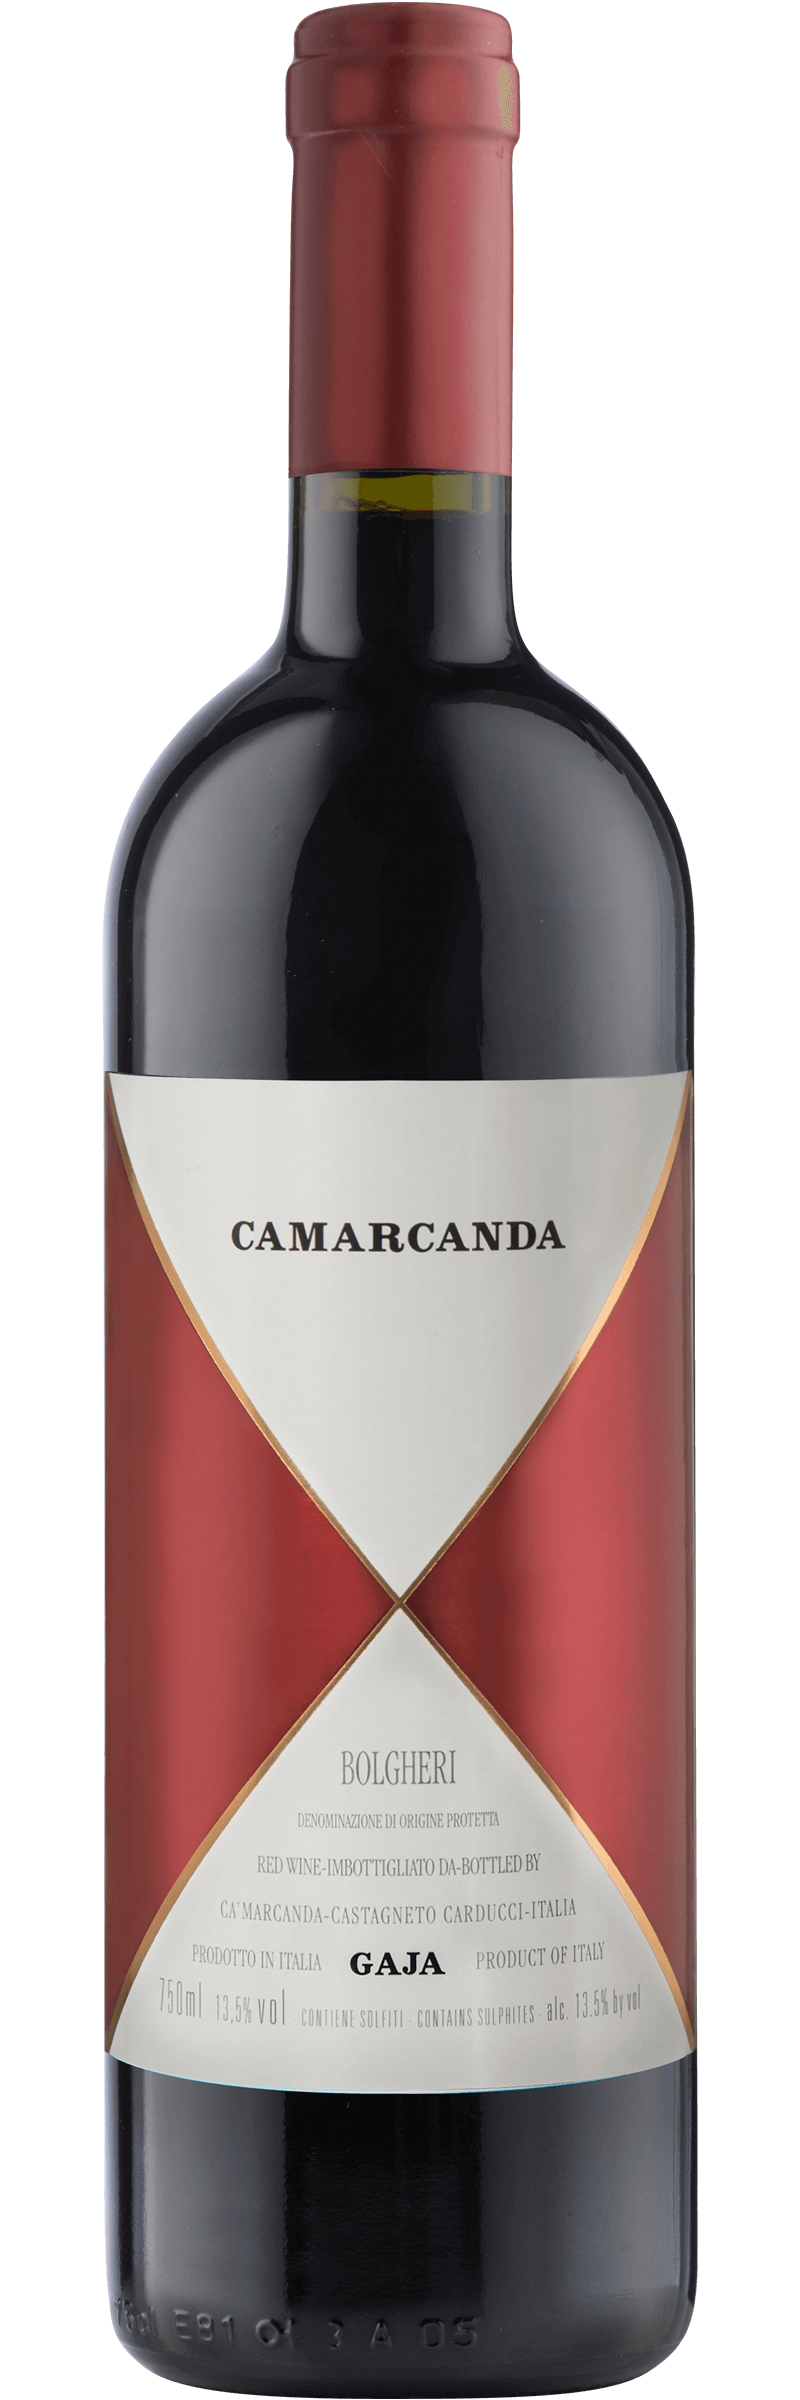 Gaja Ca’Marcanda Camarcanda 2016 wine bottle